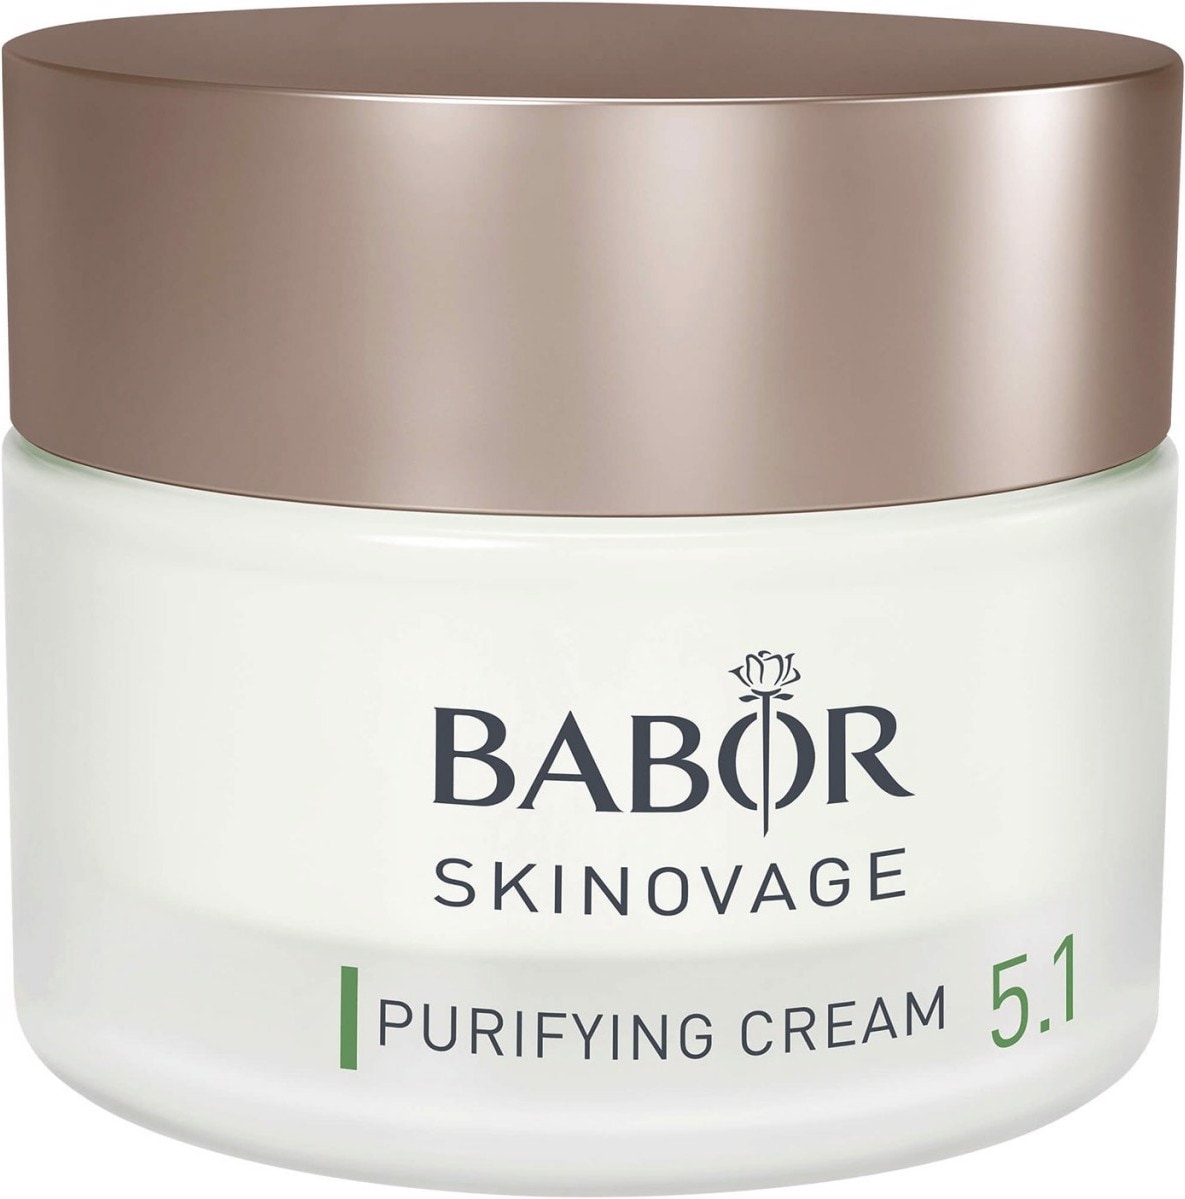 Babor SKINOVAGE Purifying Cream 5.1 (50 ml Gesichtscrème) Galaxus